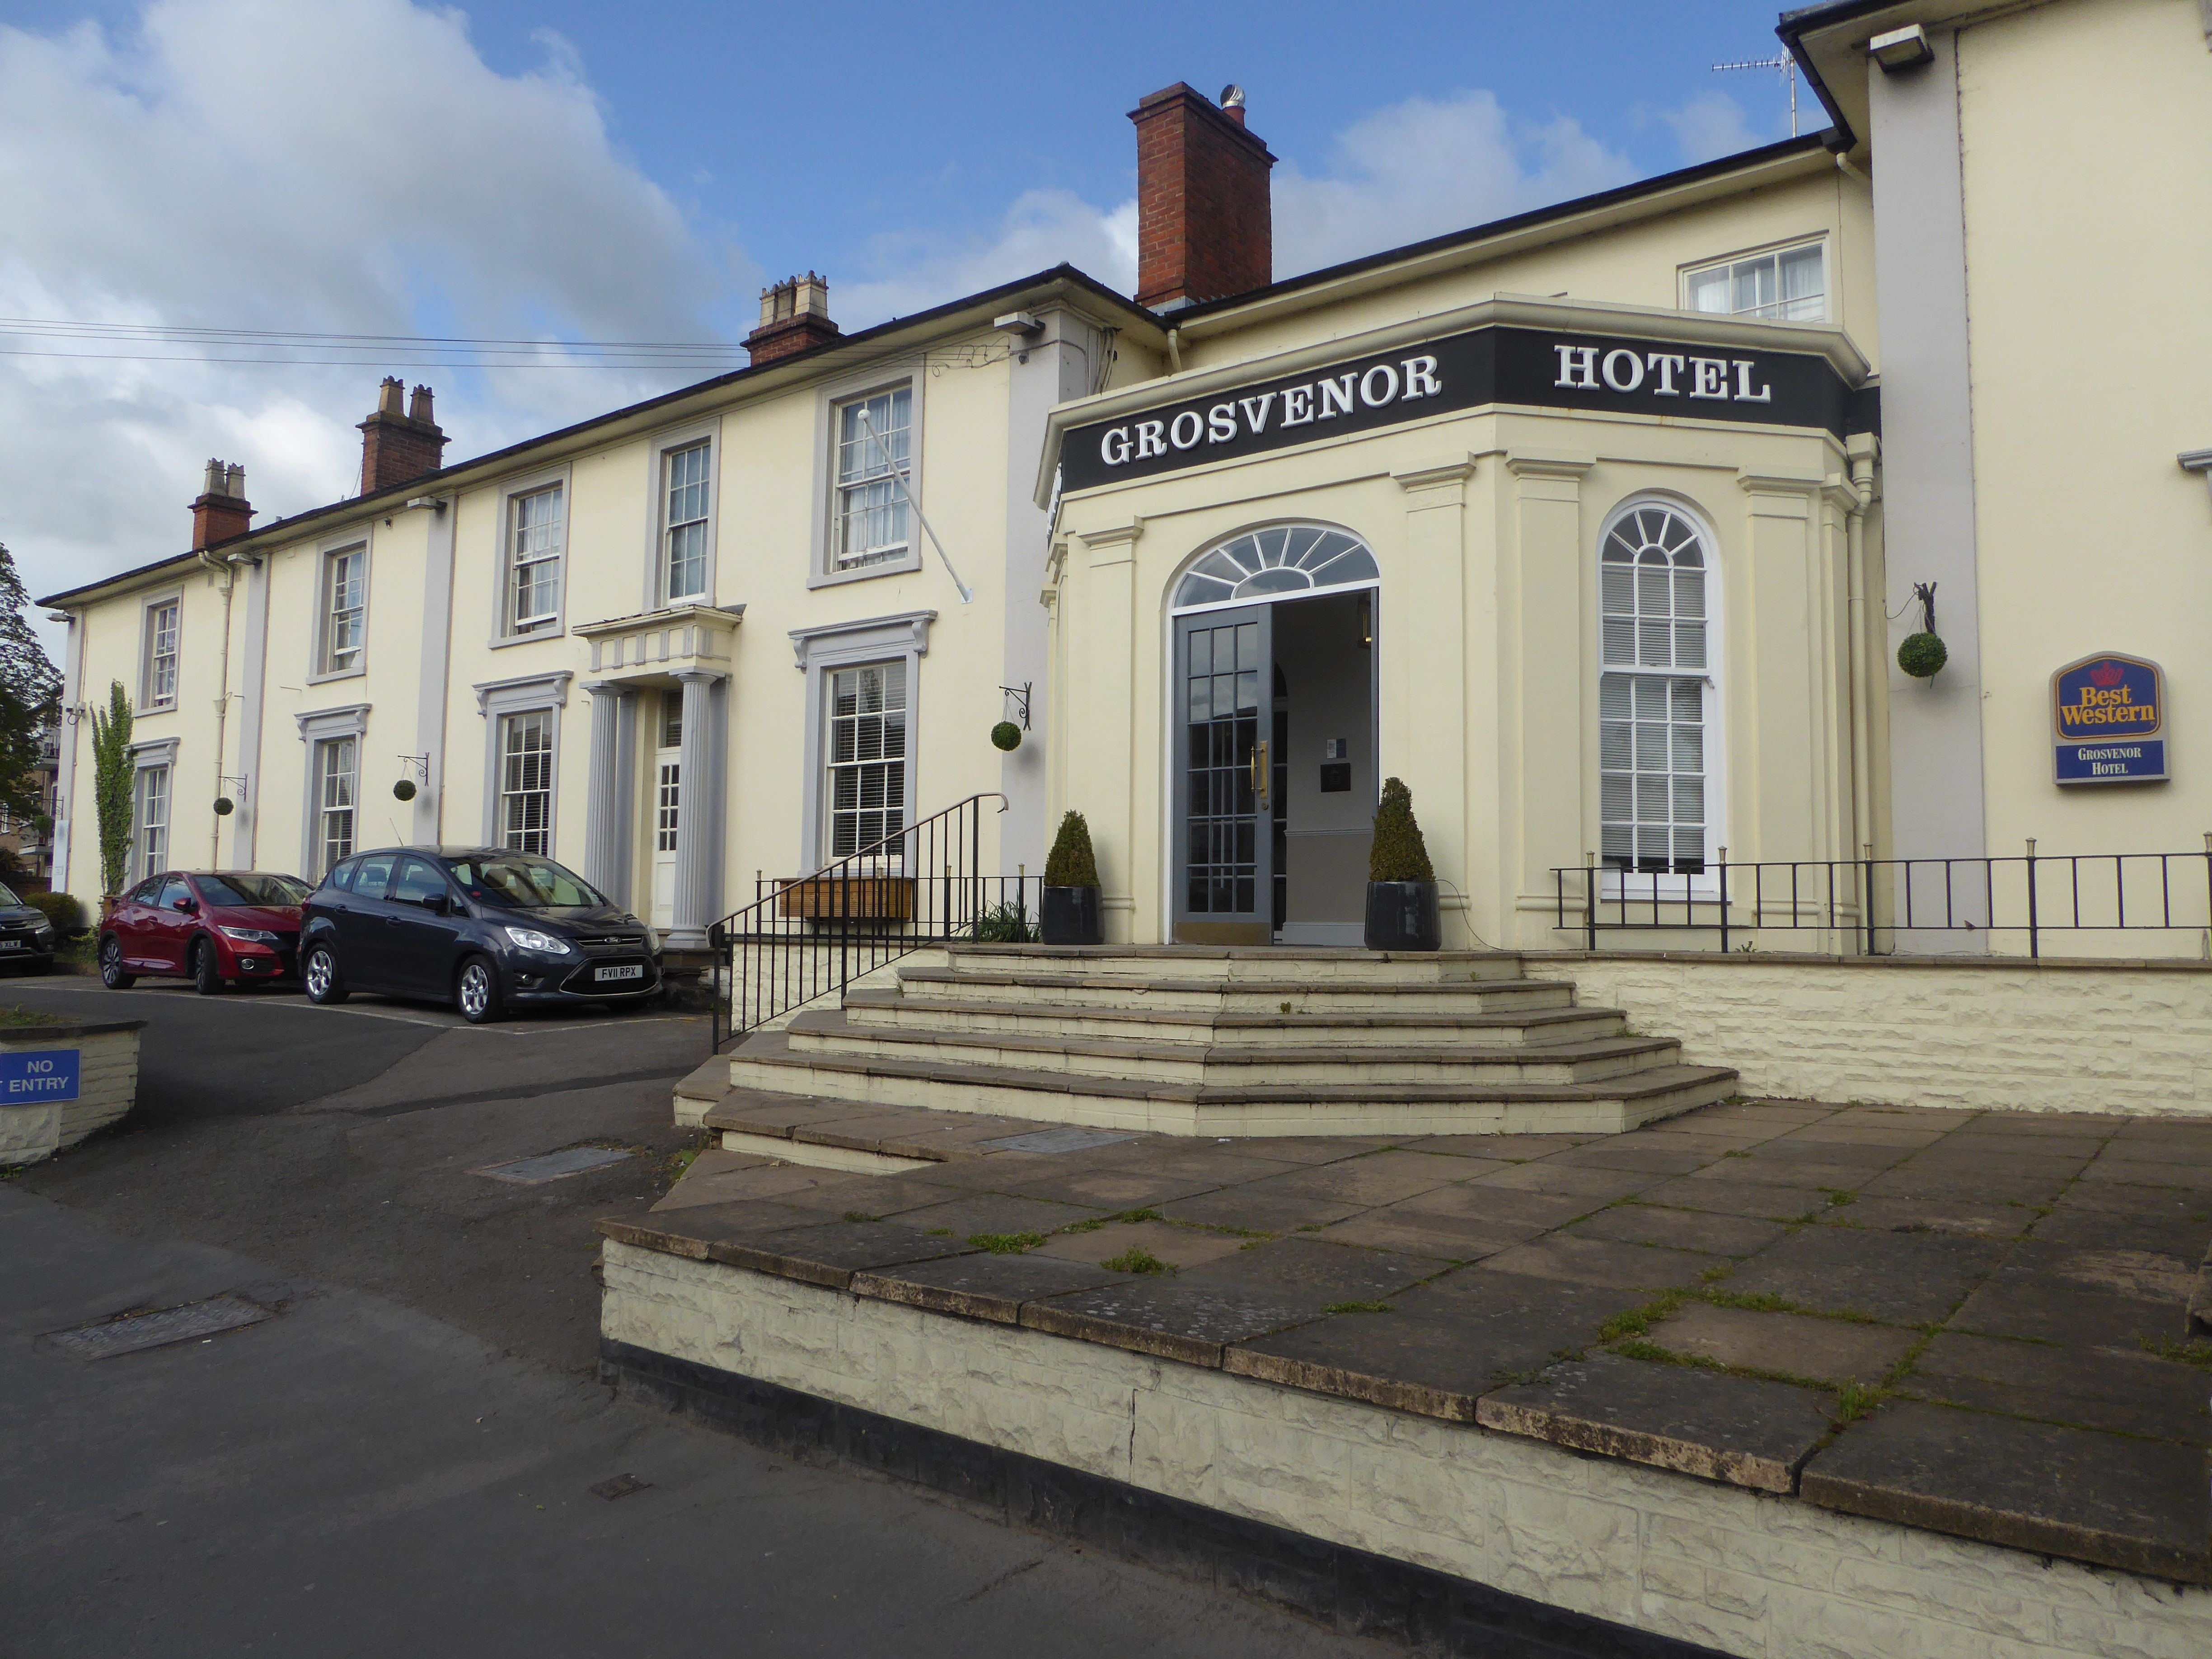 Grosvenor Hotel Stratford-upon-Avon